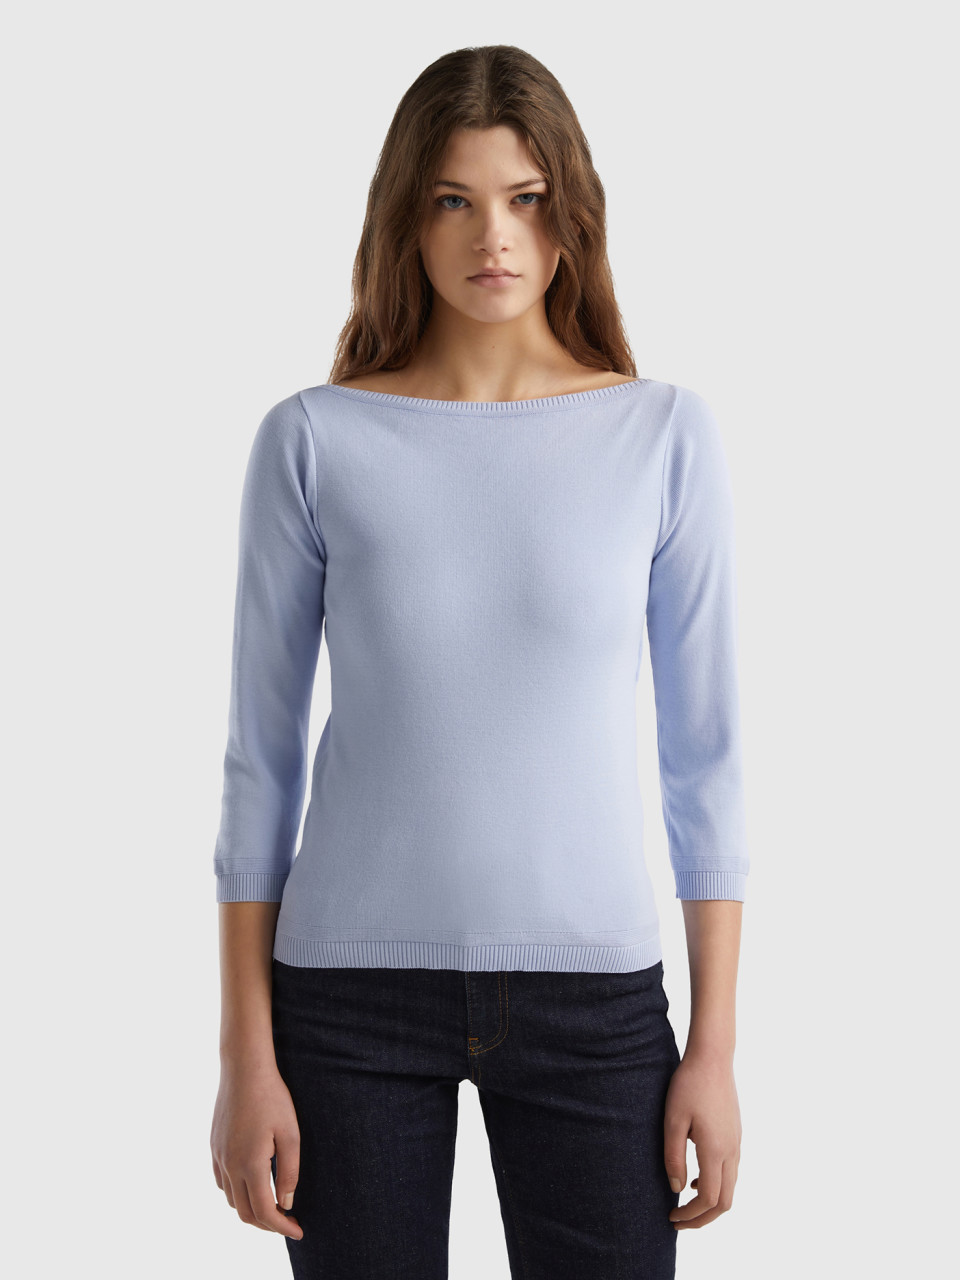 Benetton, 100% Cotton Boat Neck Sweater, Sky Blue, Women